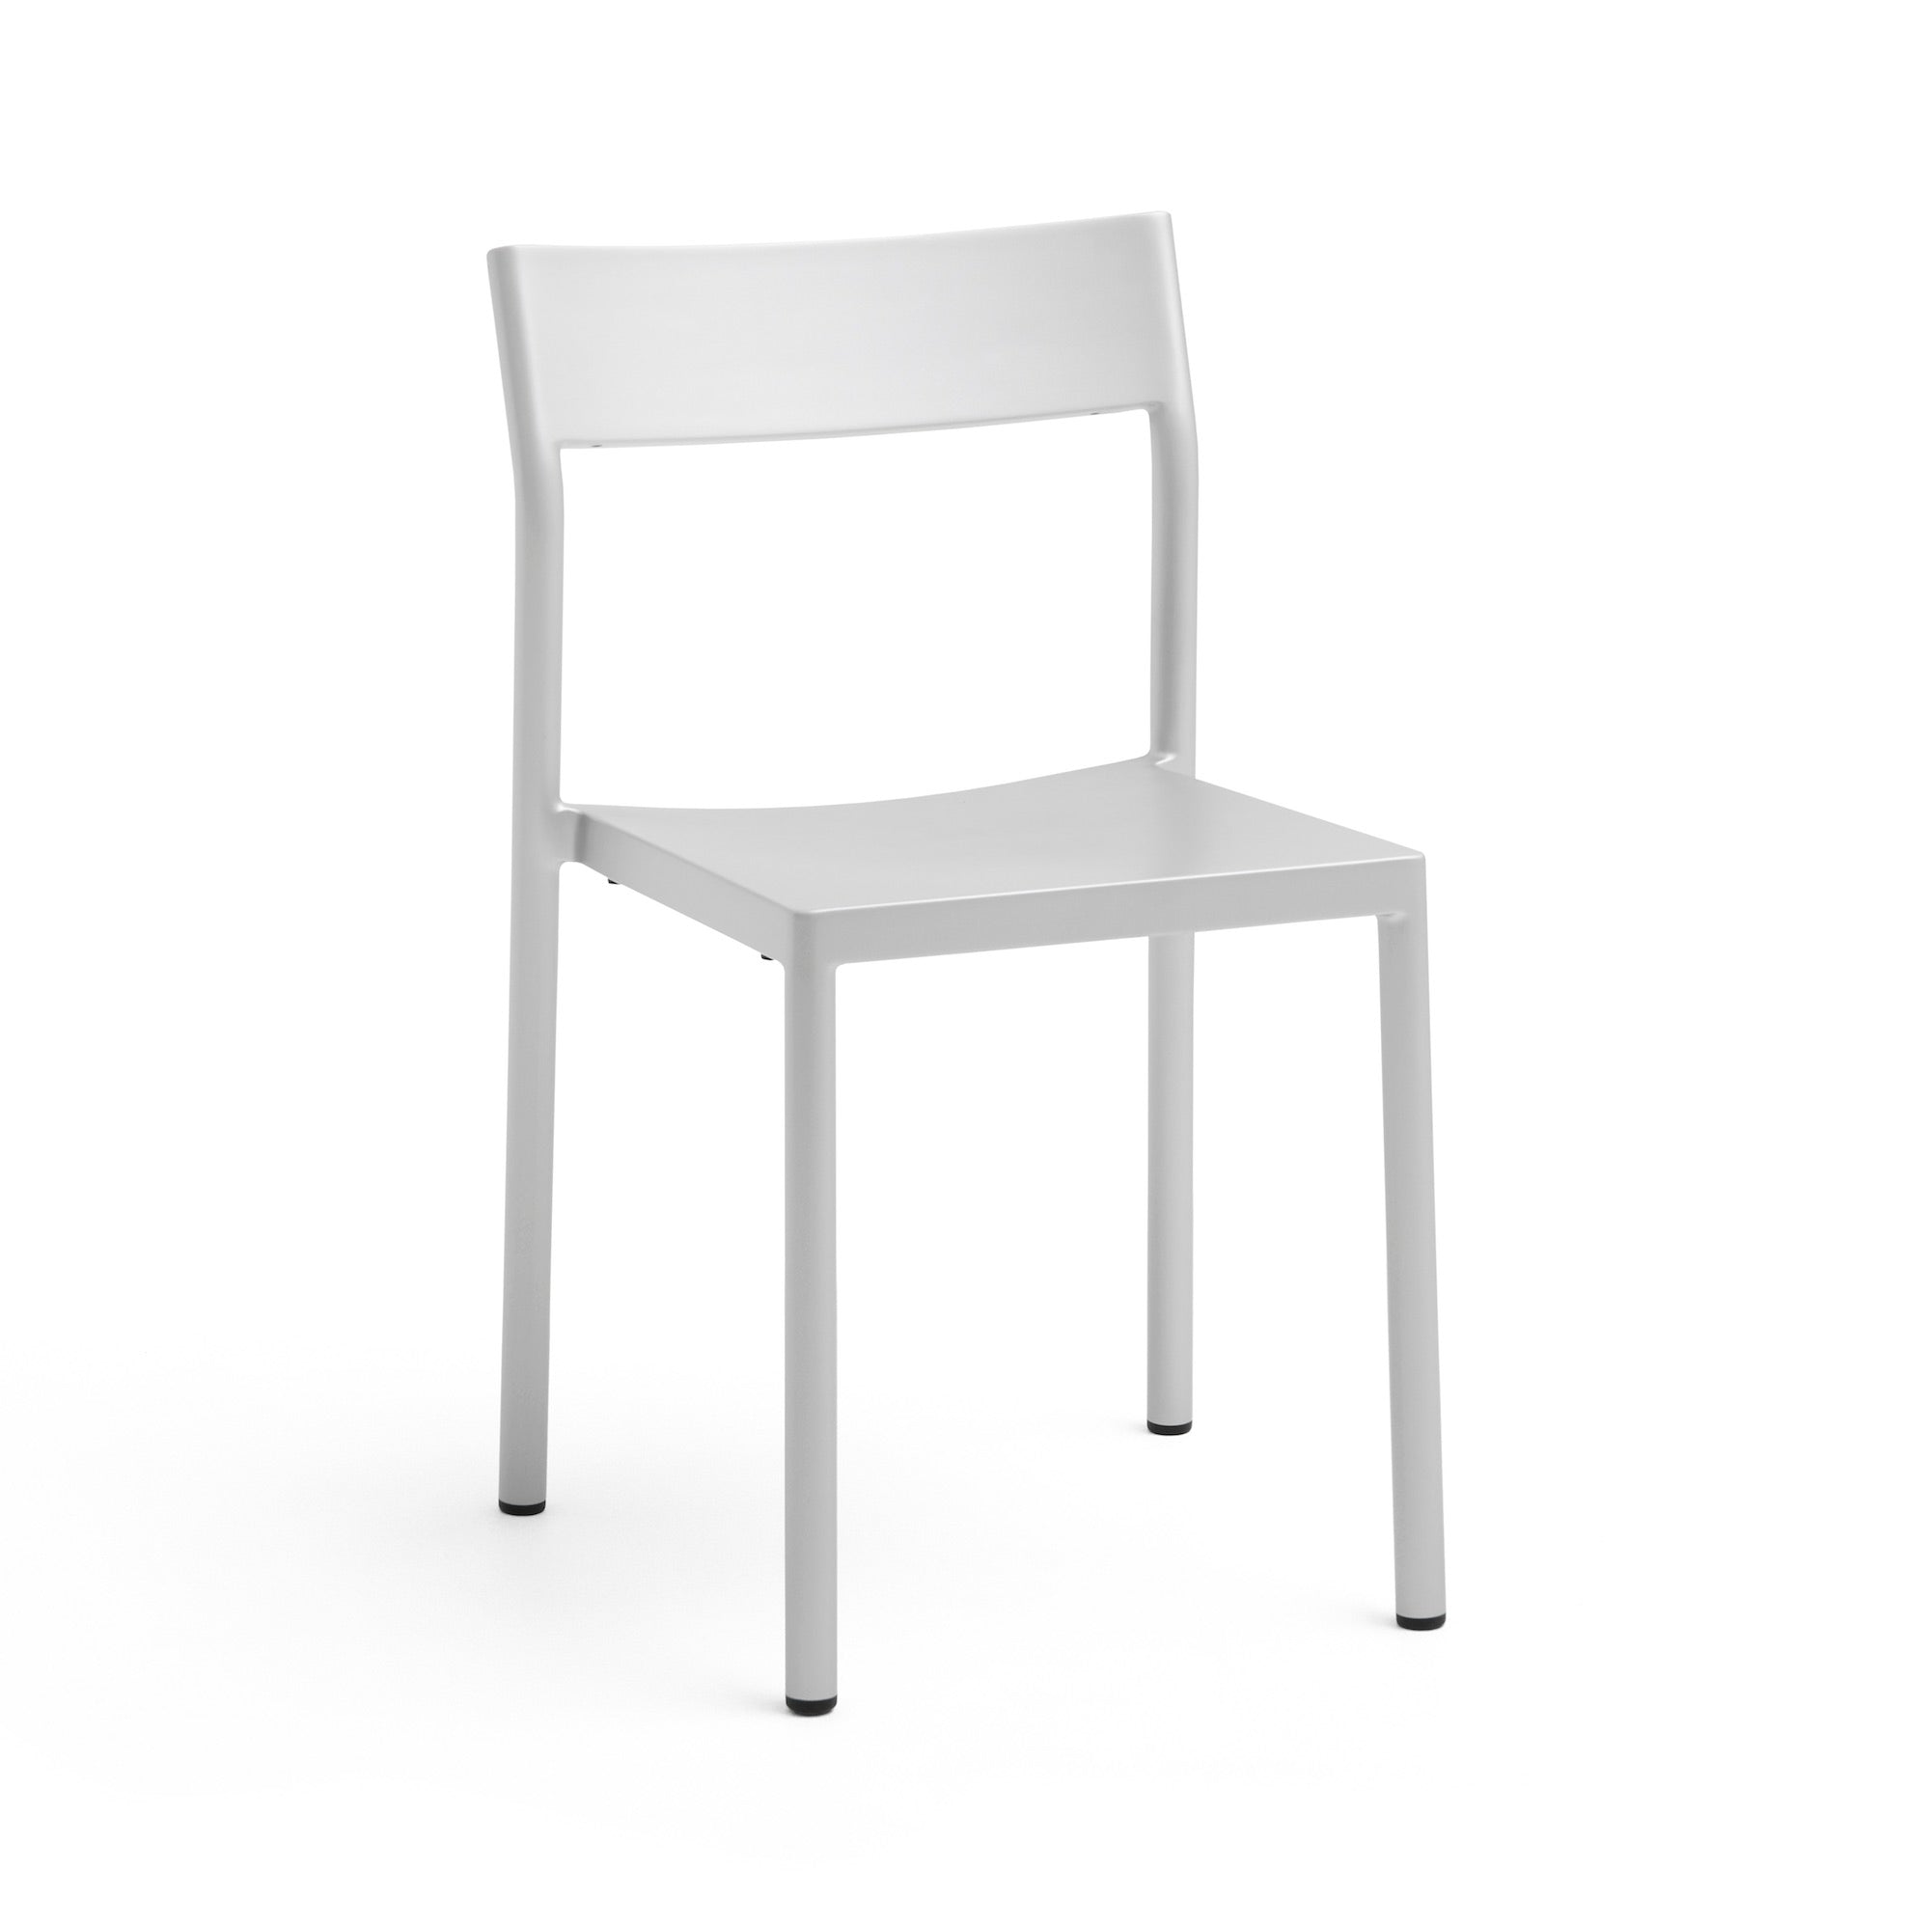 Type Chair scaun din aluminiu